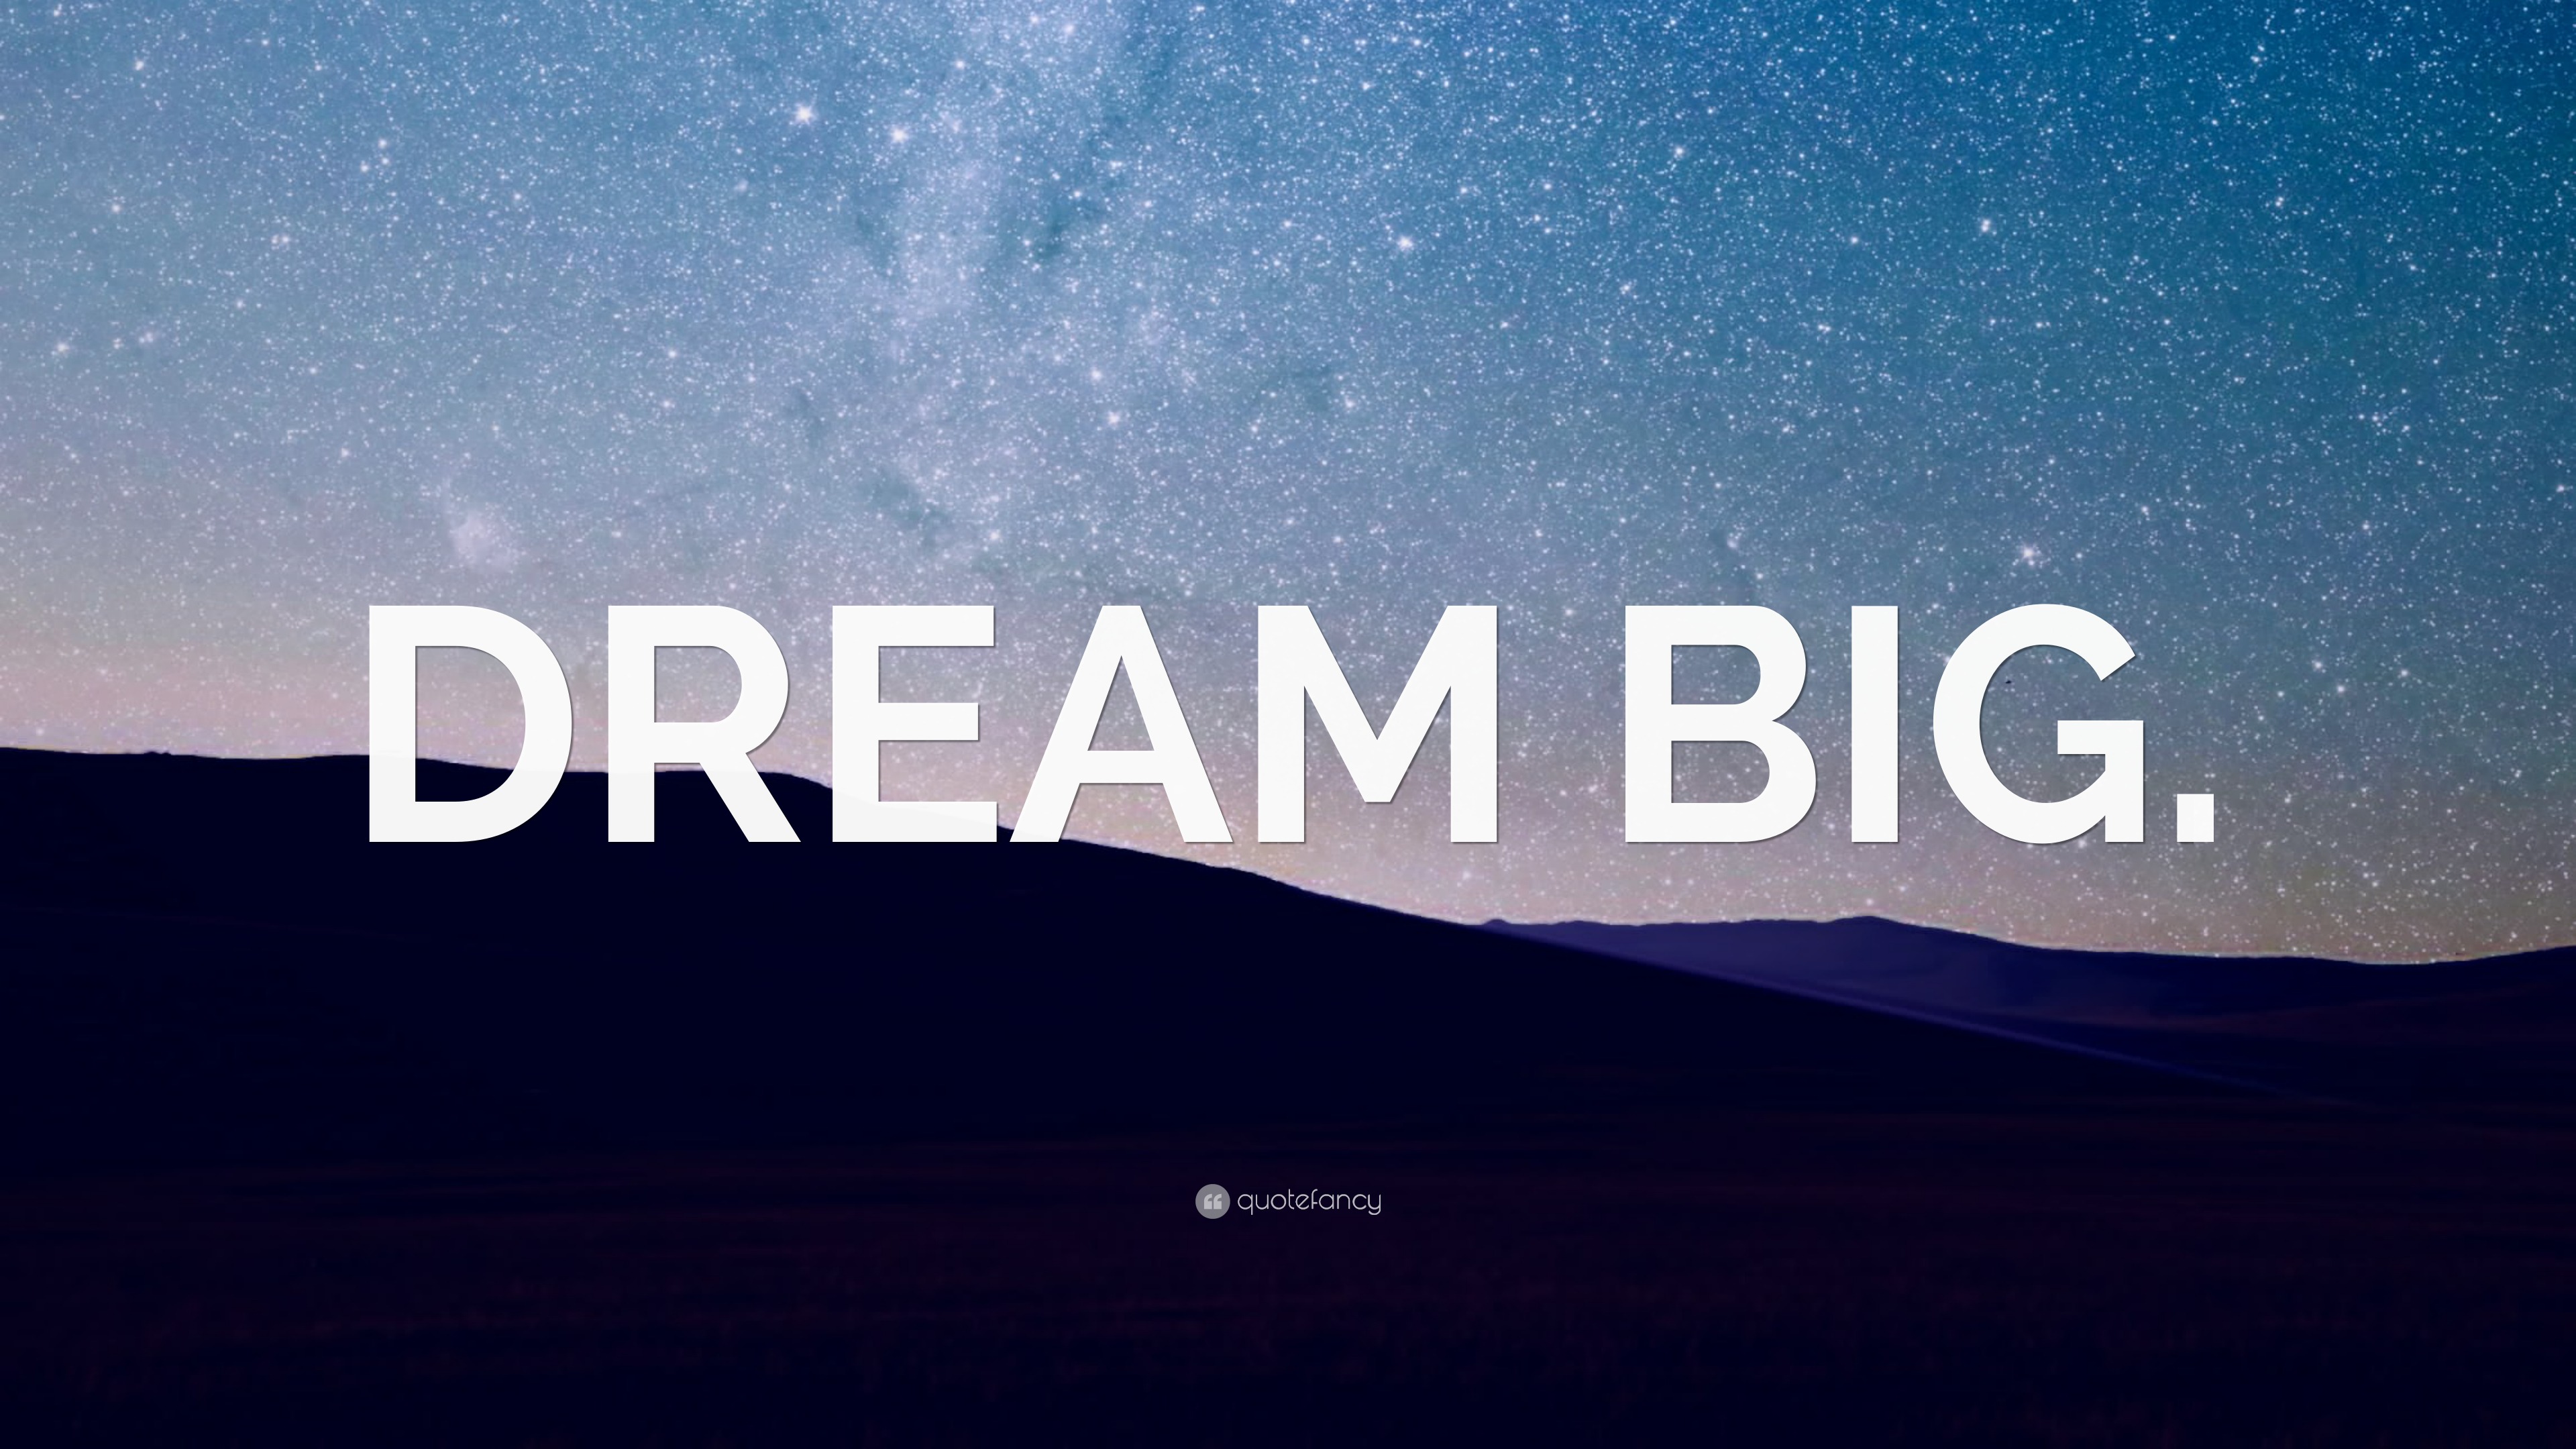 “DREAM BIG.” Wallpaper by QuoteFancy